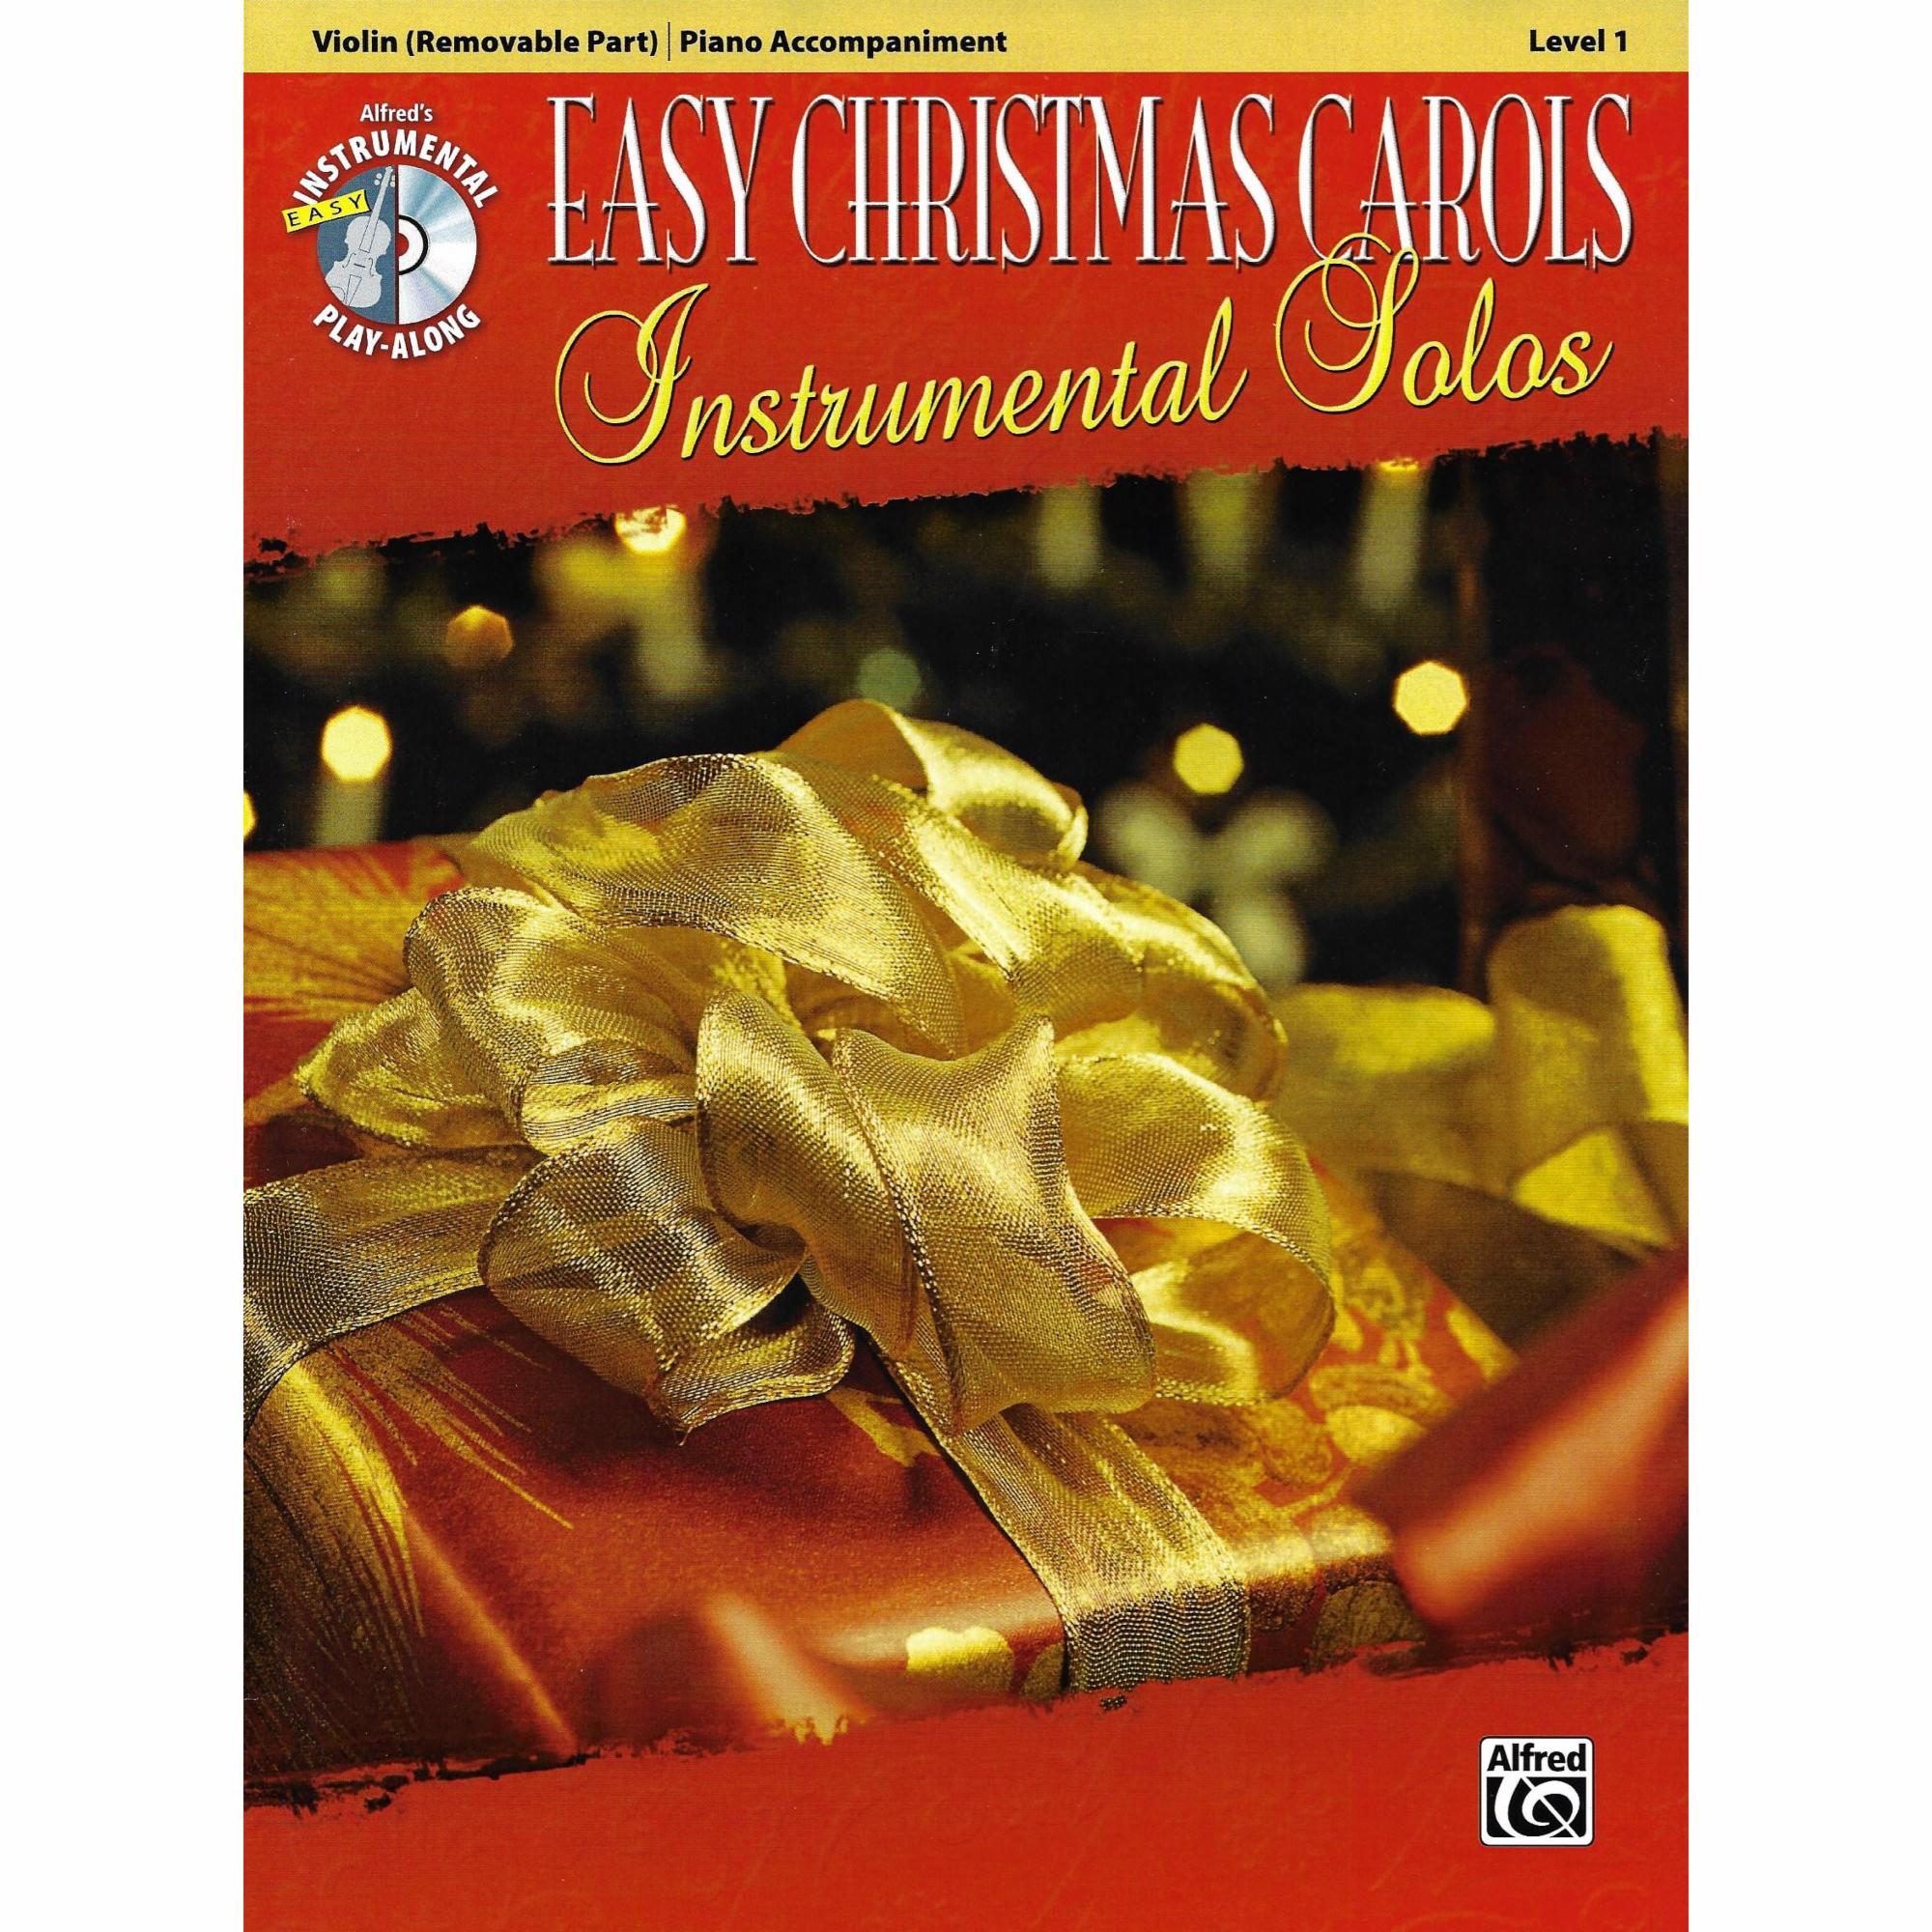 Easy Christmas Carols for Violin, Viola, or Cello and Piano